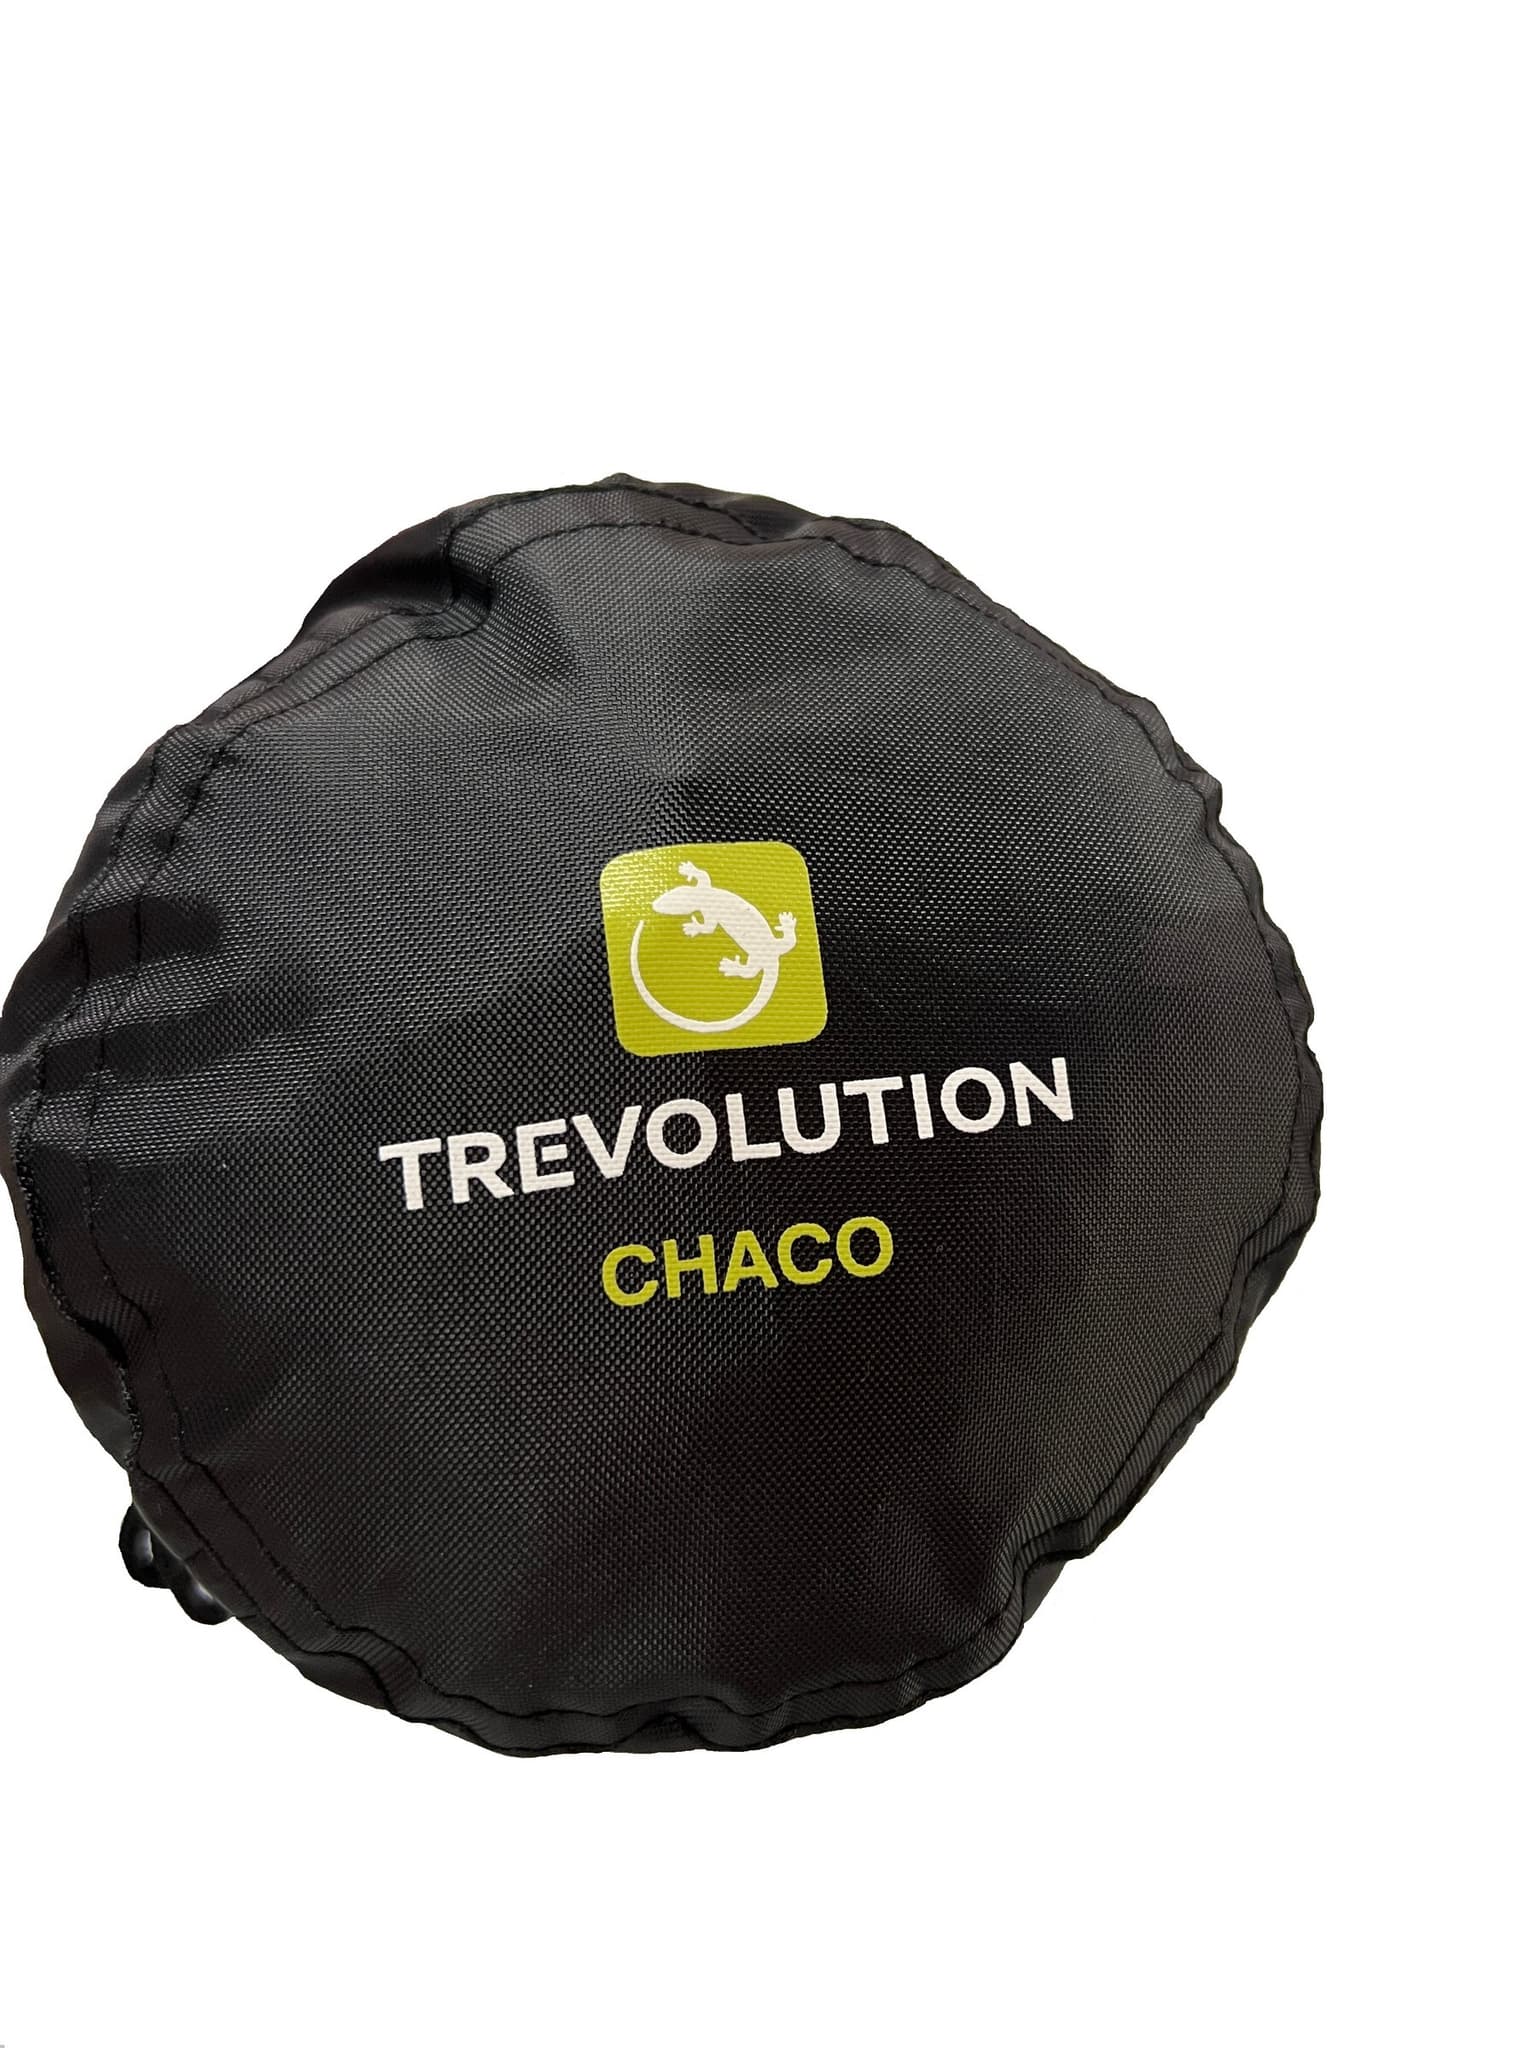 Trevolution Trevolution Chaco Sac de couchage en fibres synthétiques lime 7